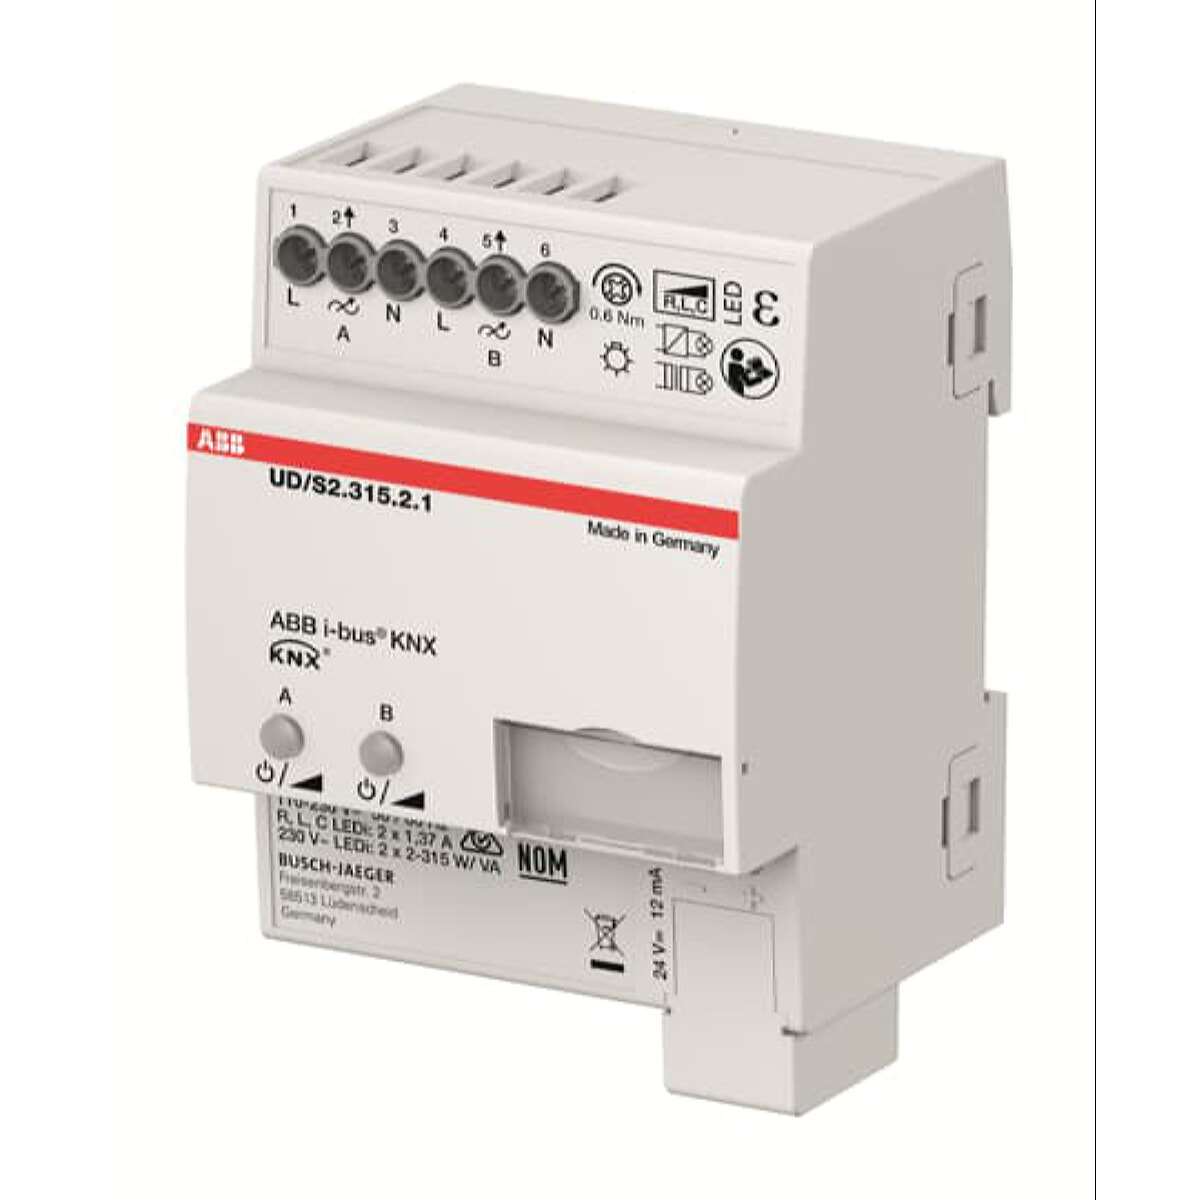 ABB Stotz-Kontakt LED-Dimmer UD/S2.315.2.1 2x315 W/VA 1/2 fach